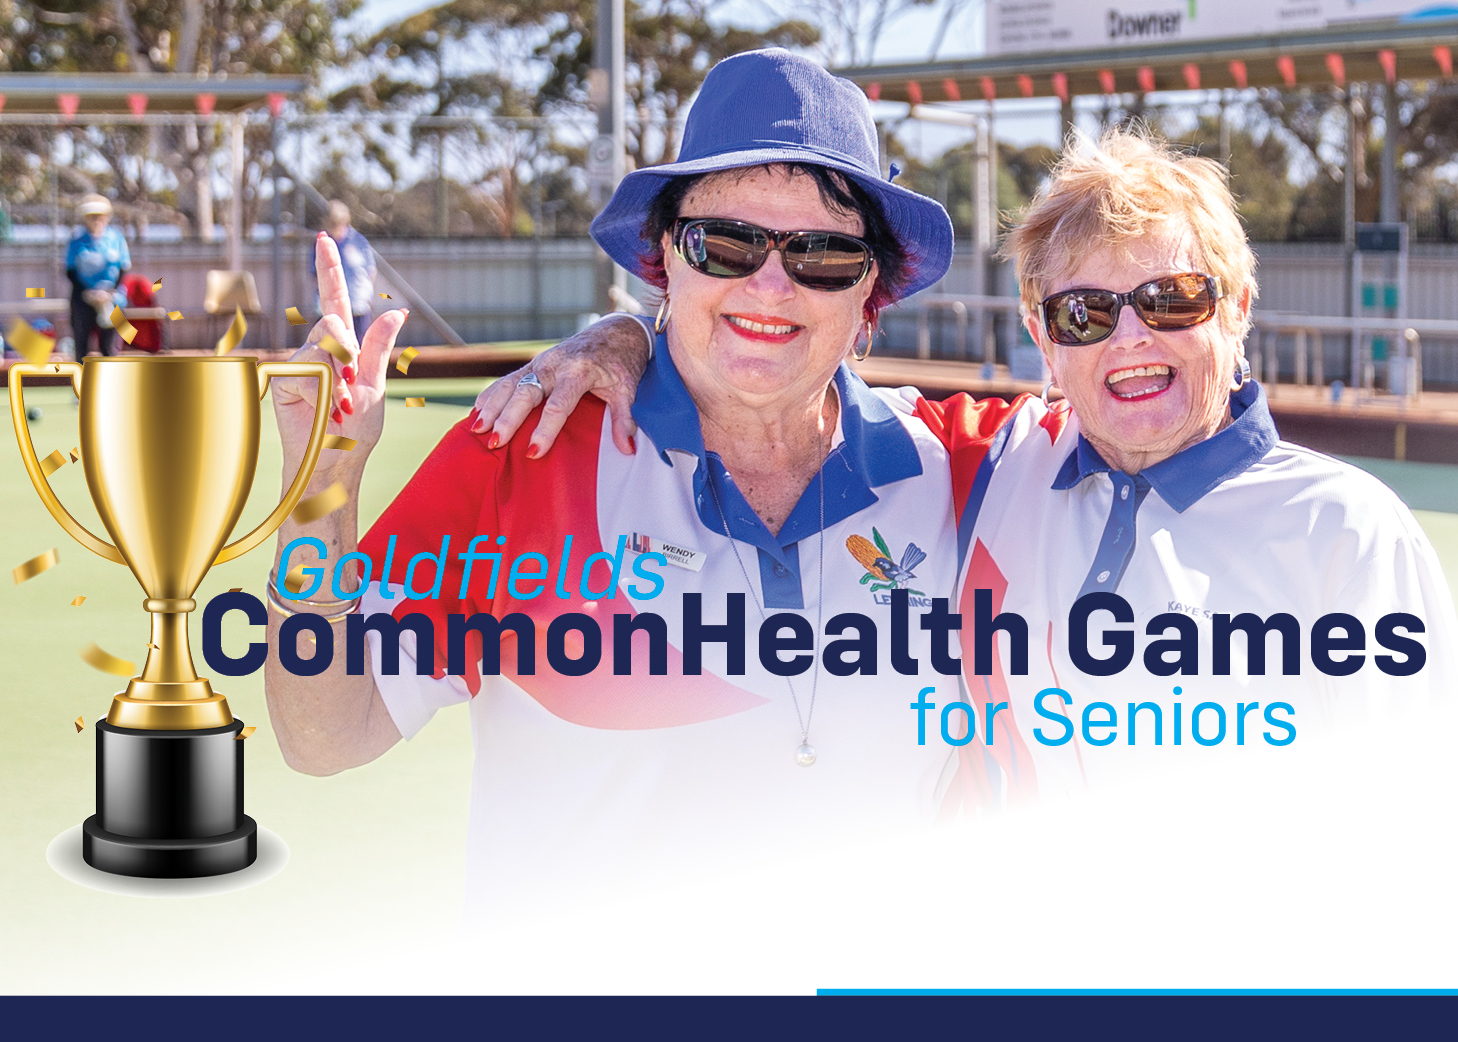 Goldfields CommonHealth Games for Seniors